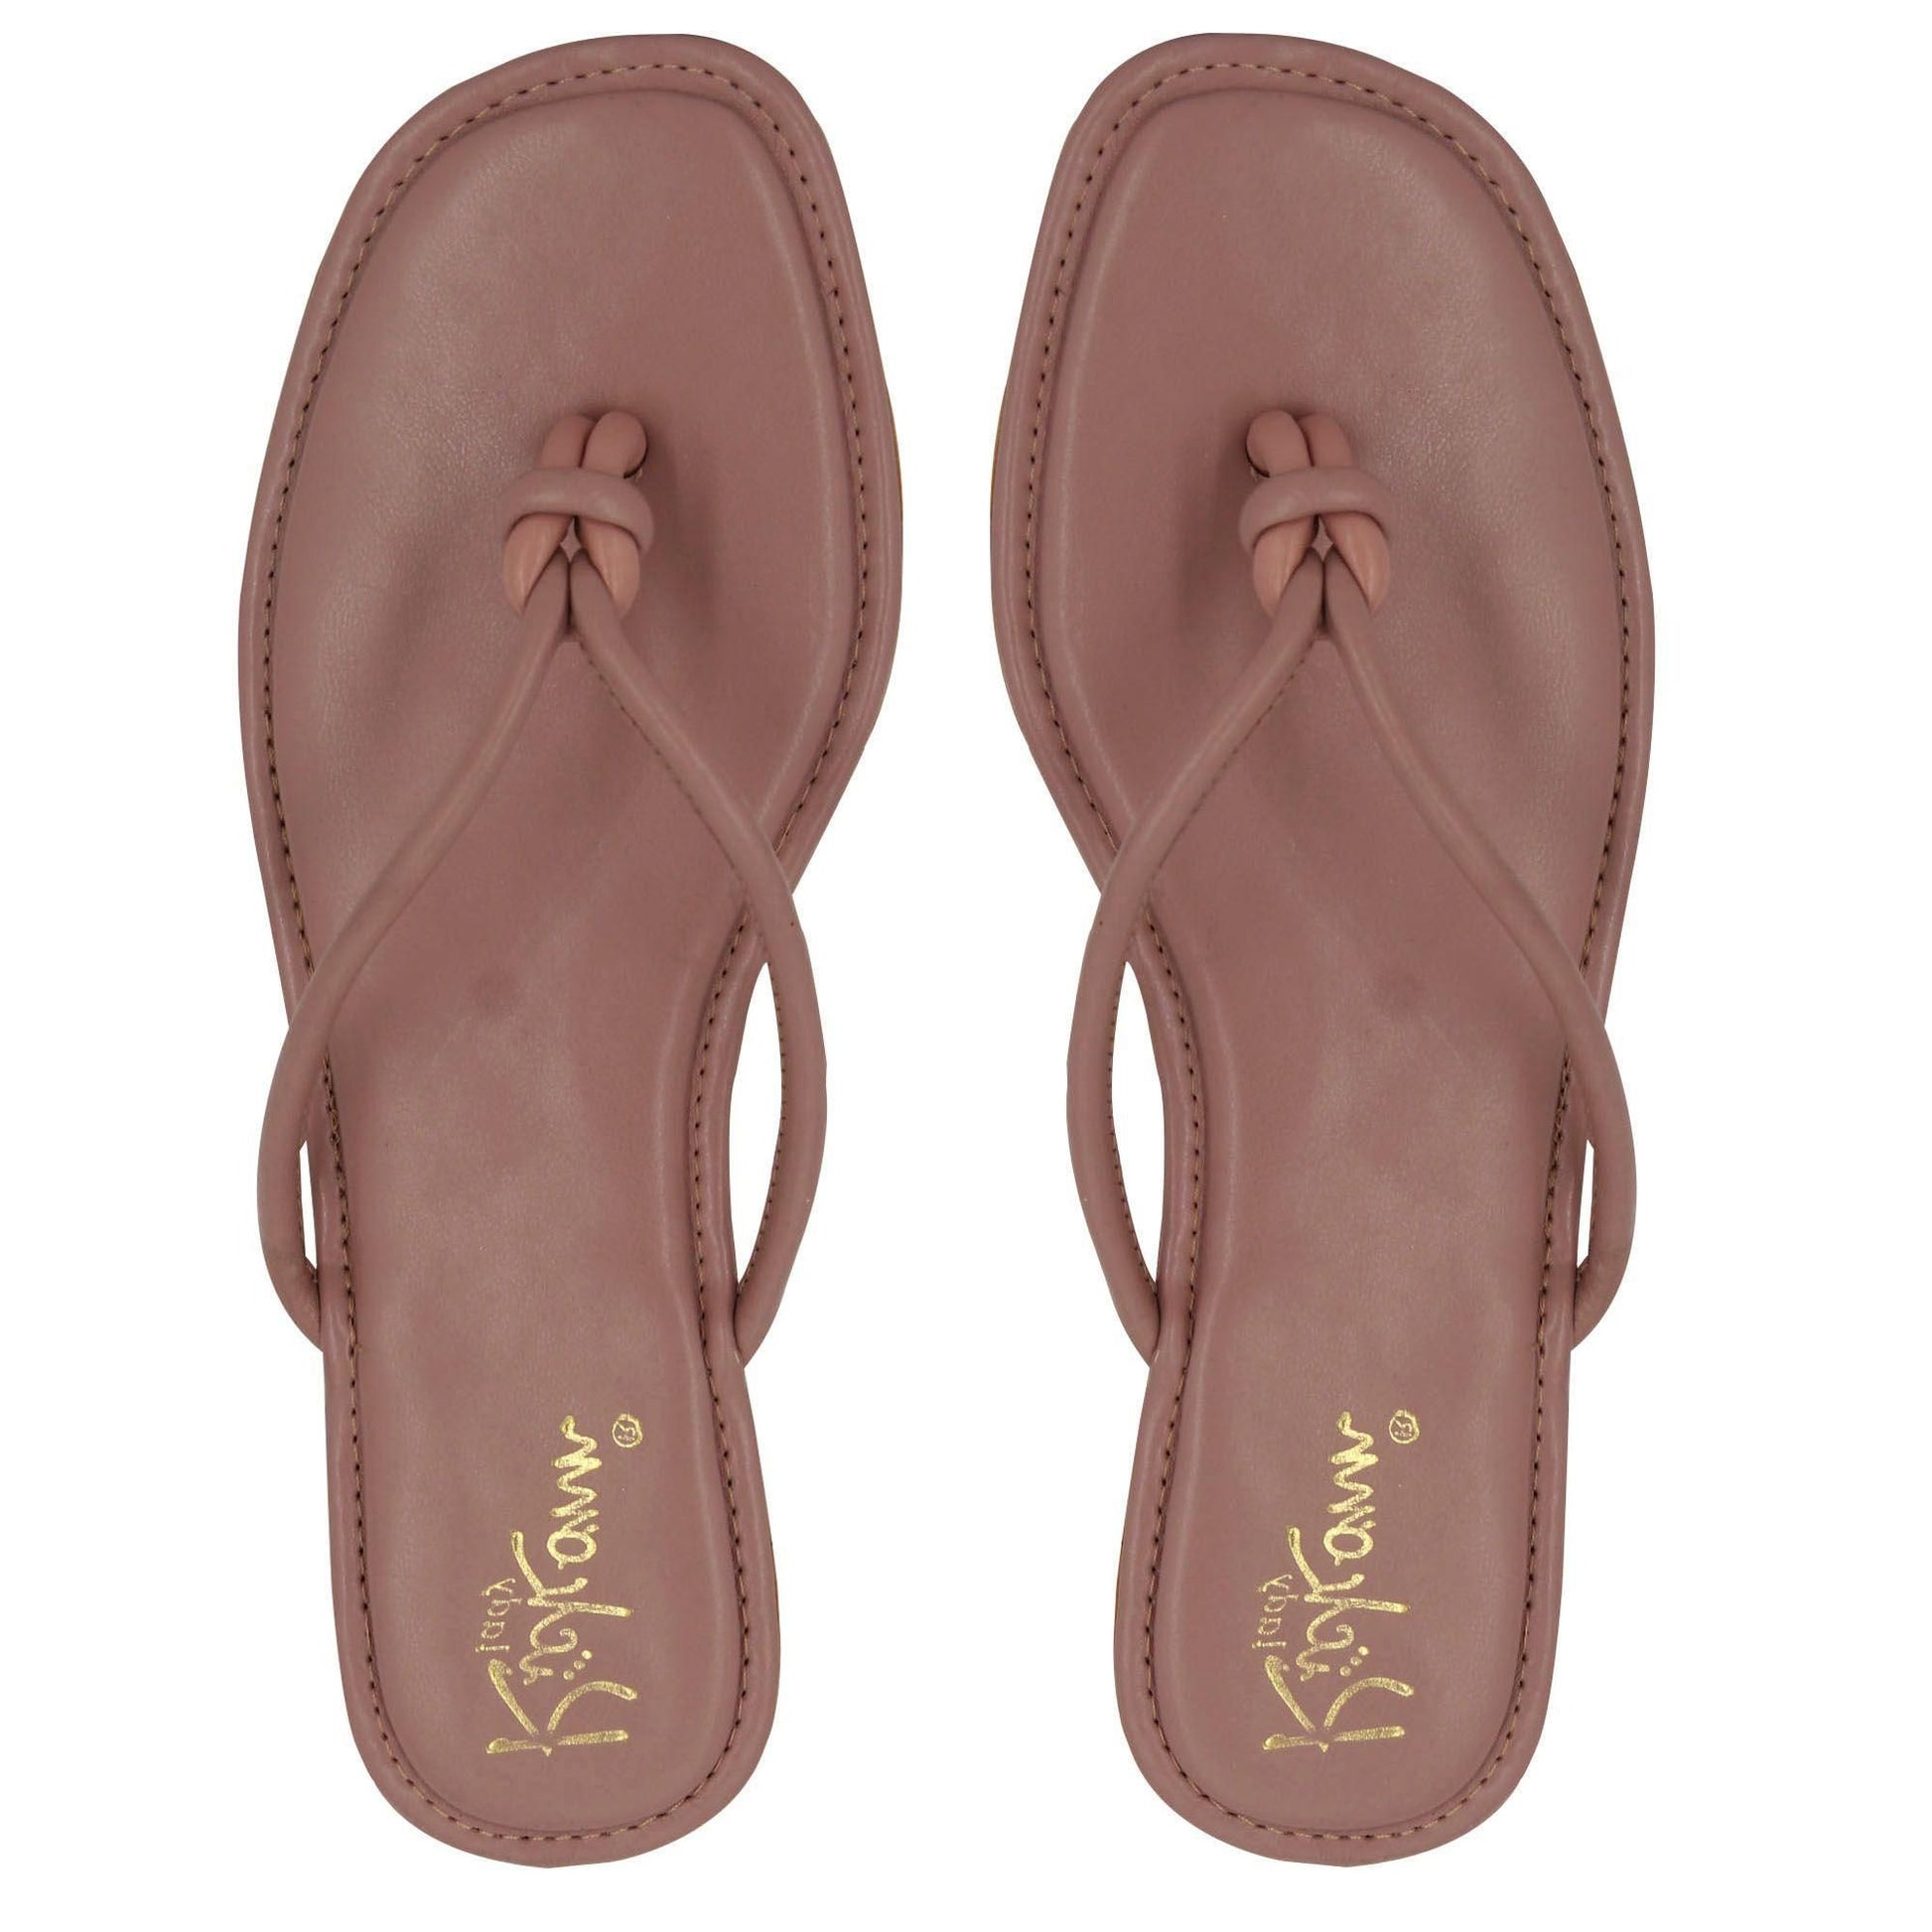 Fancy Casual Flats Slippers For Women - Shopaholics